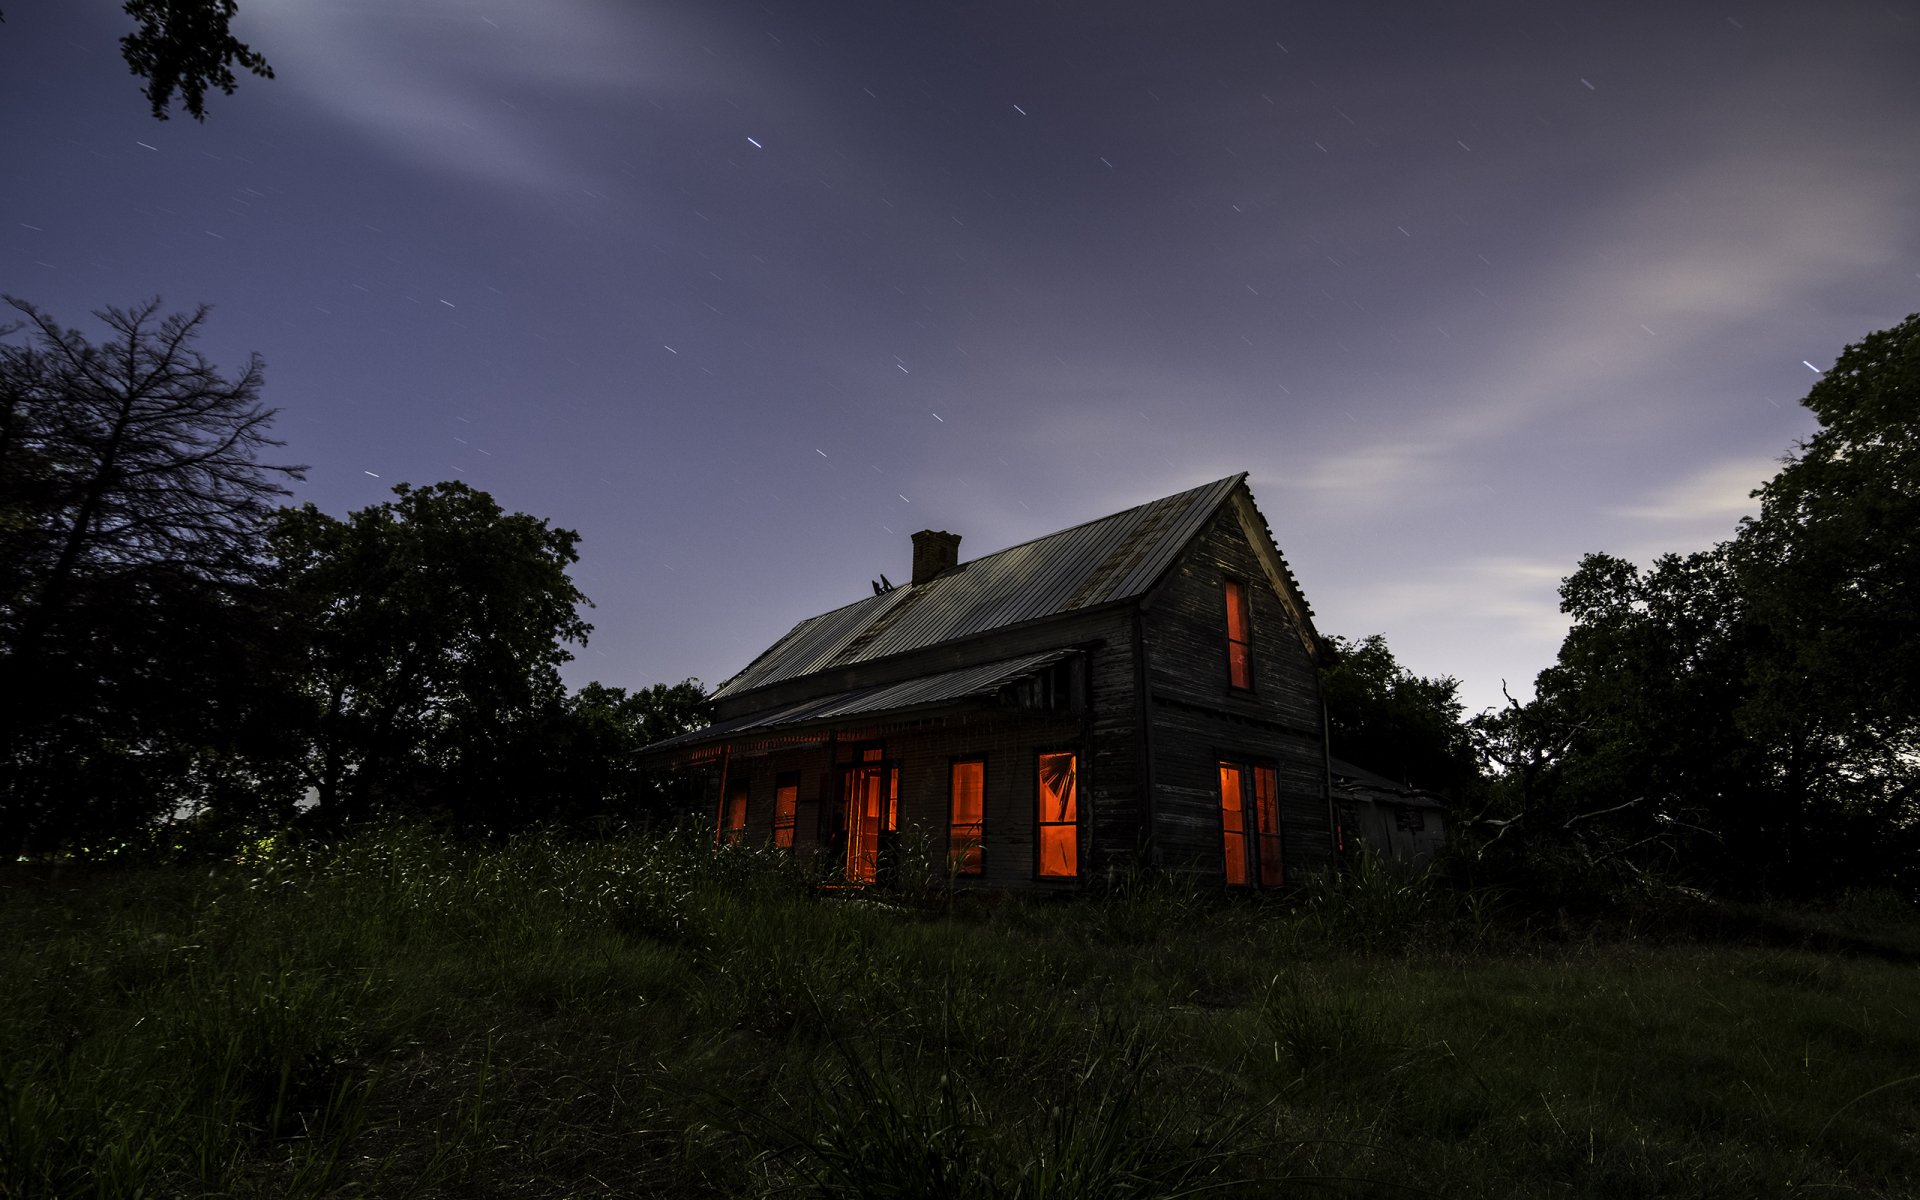 Illuminated House At Night